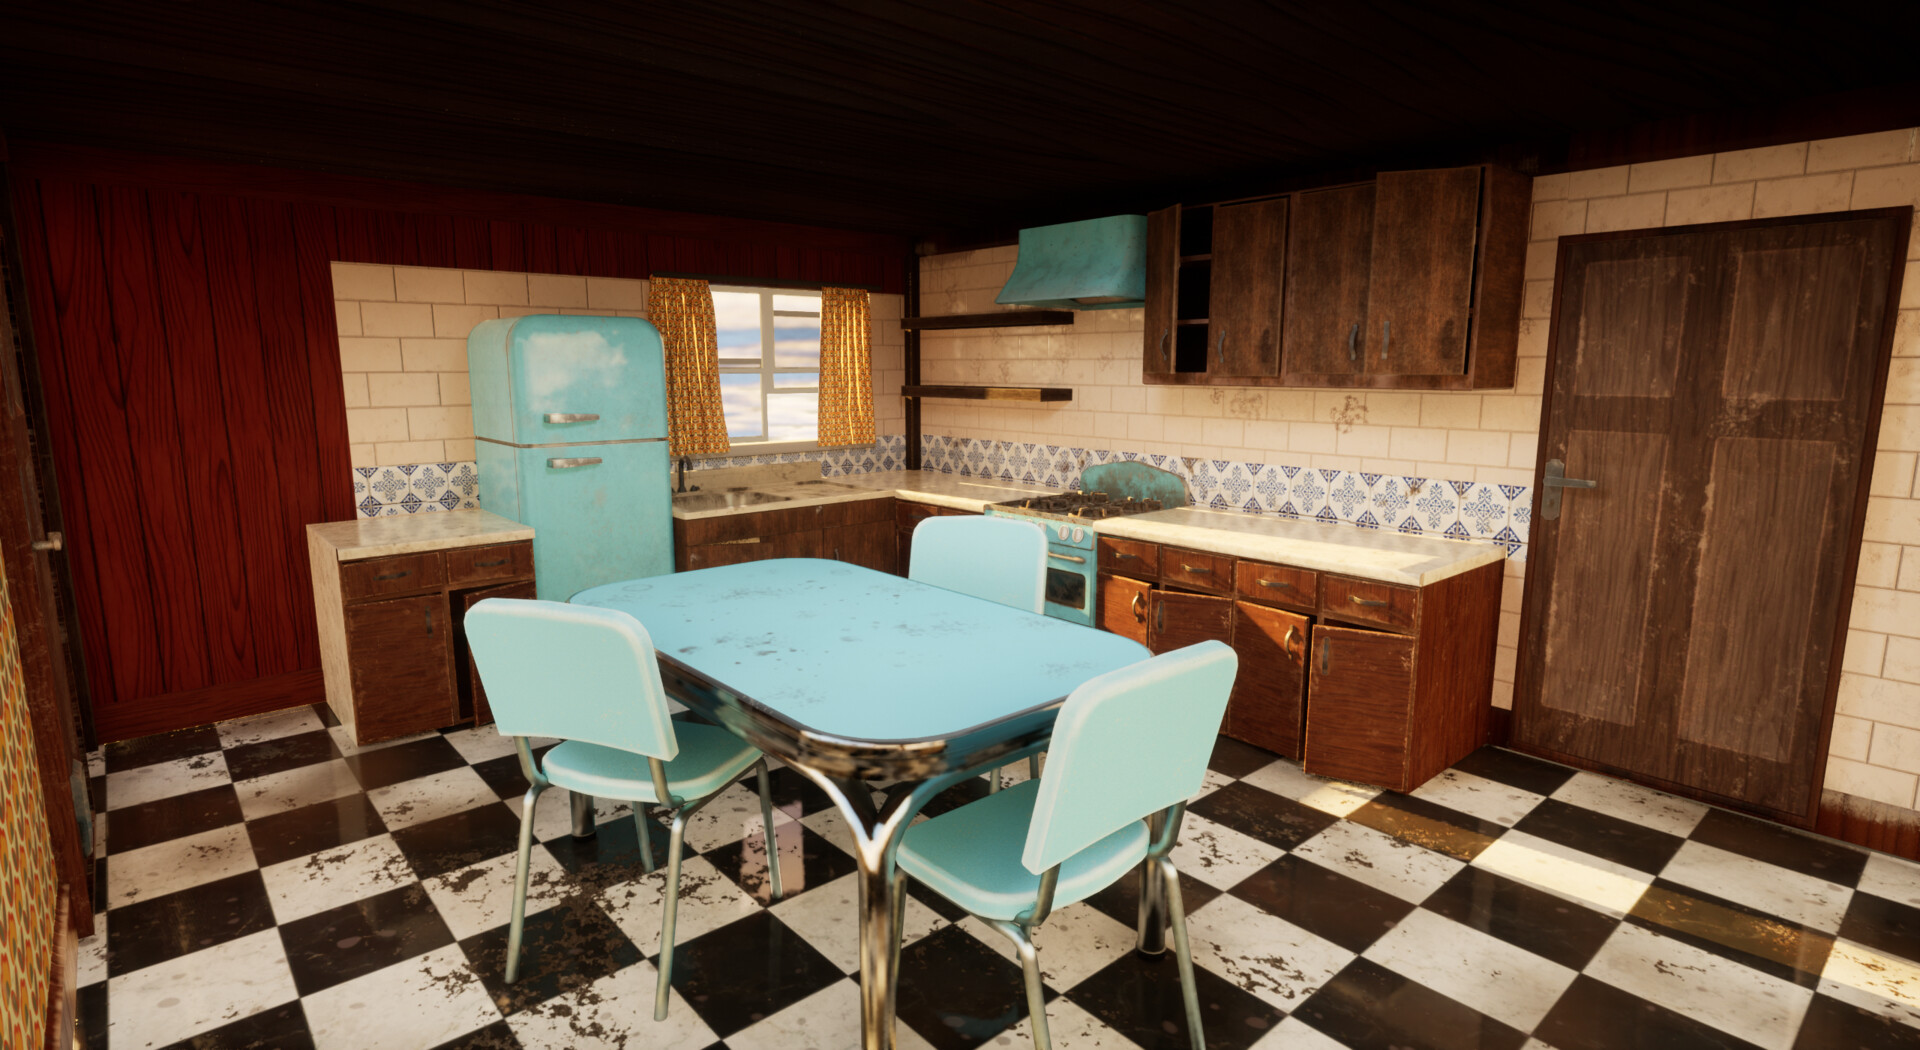 ArtStation - 70s Kitchen Environment